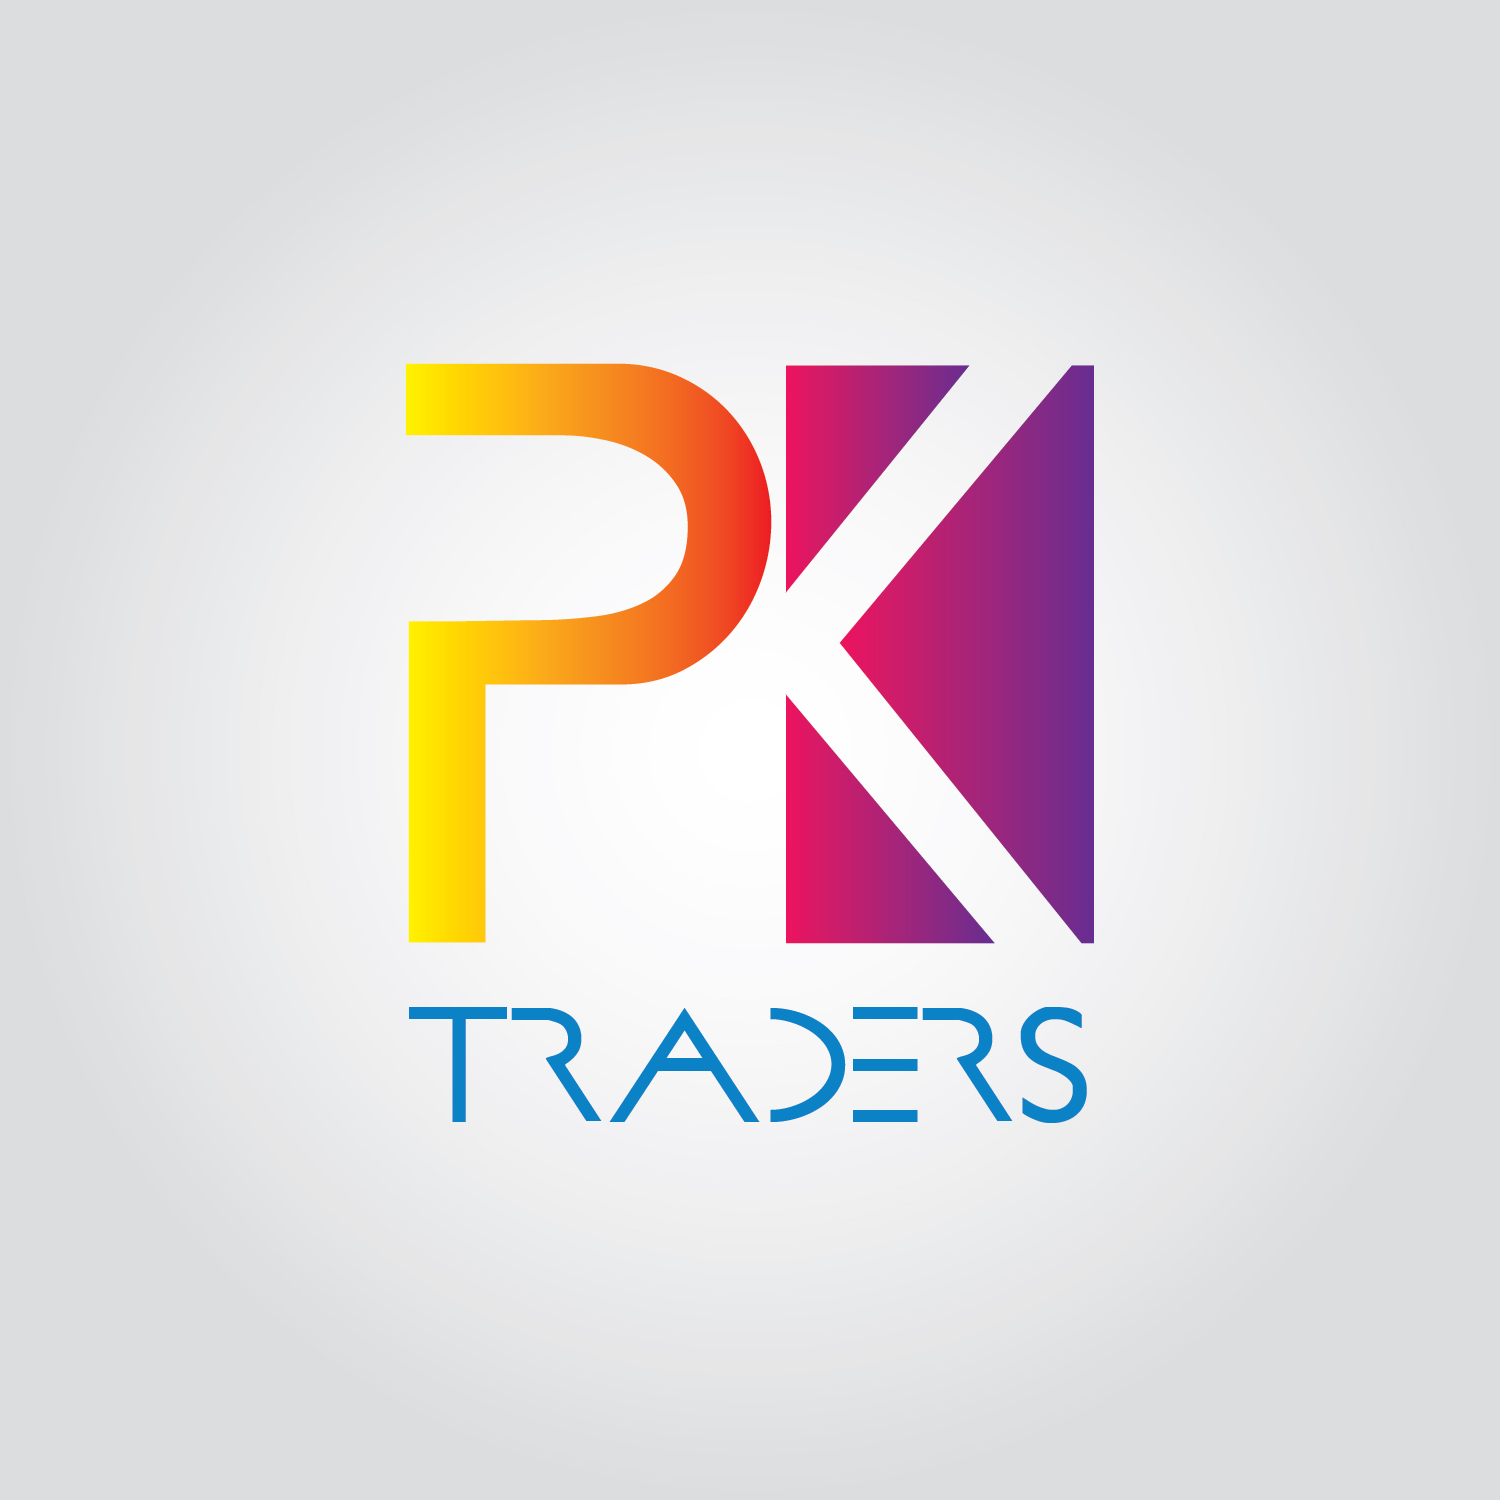 PK TRADERS-03